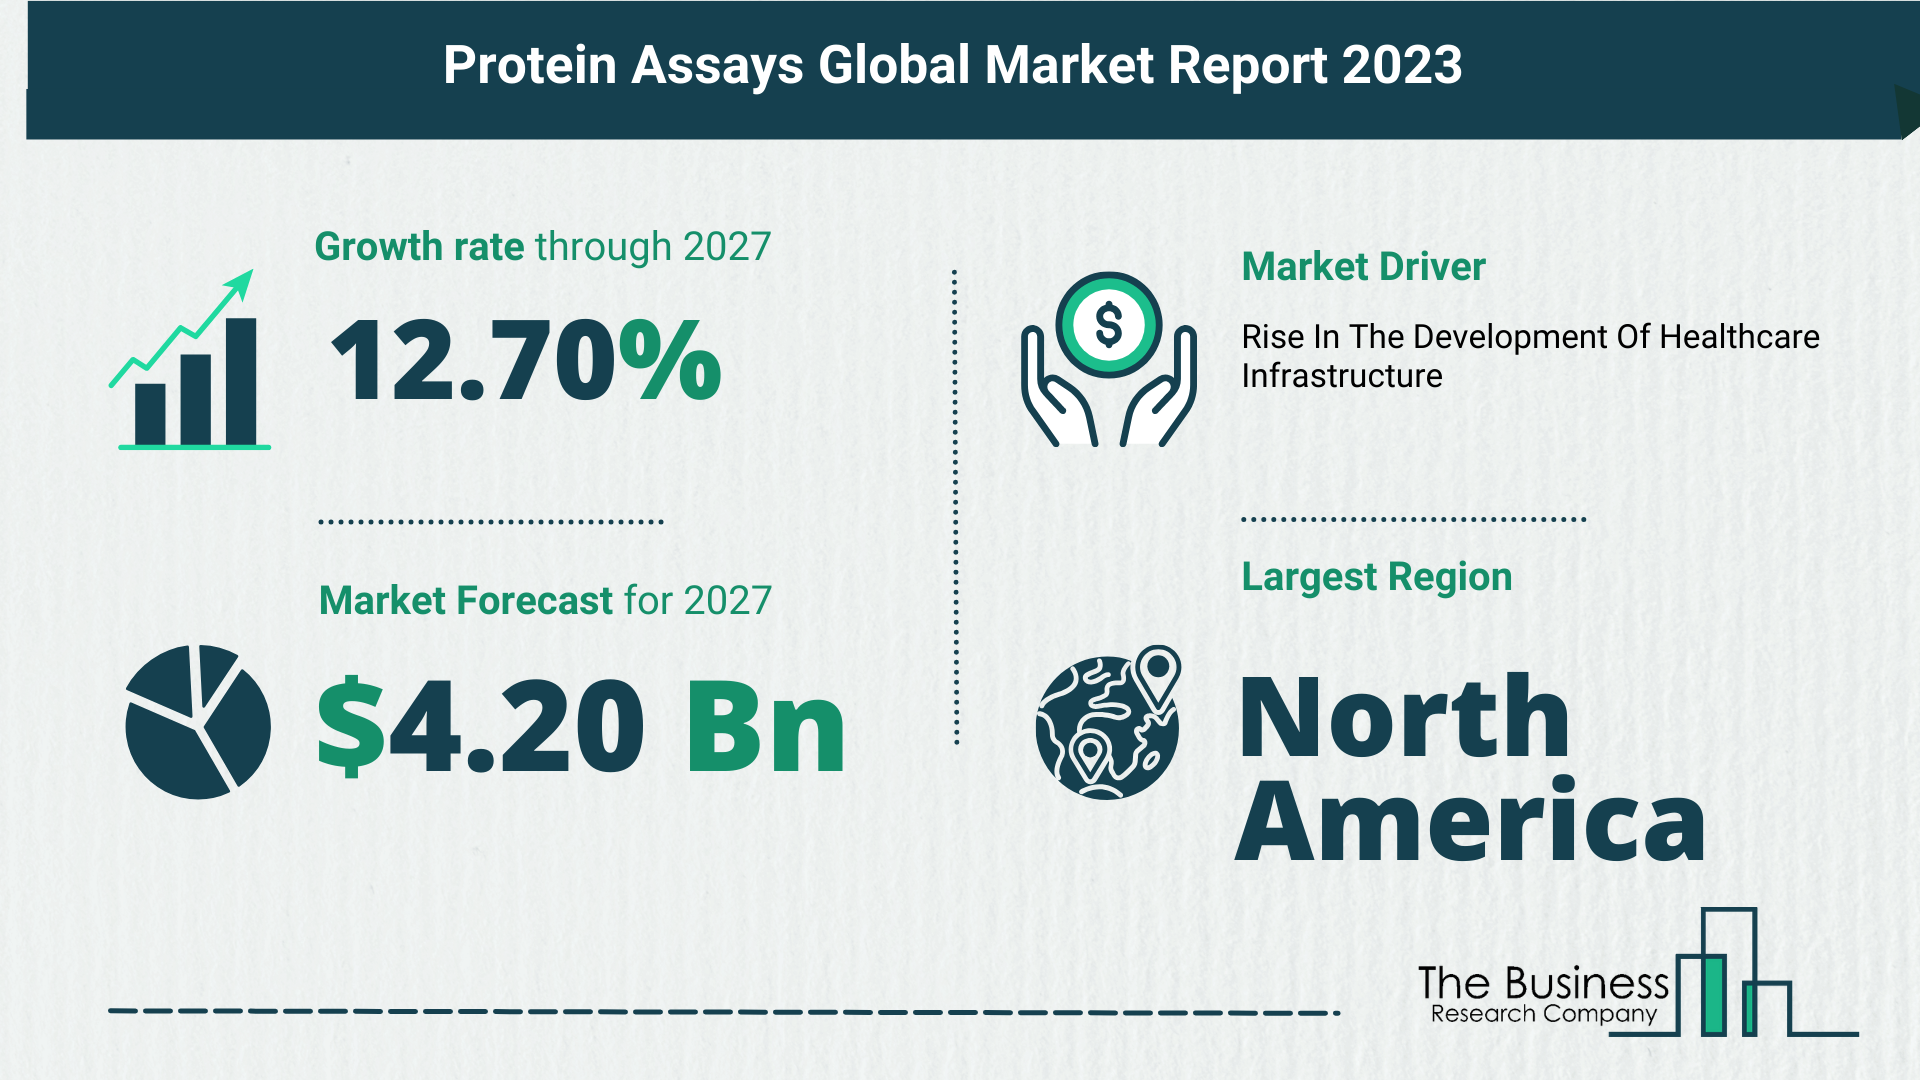 Global Protein Assays Market